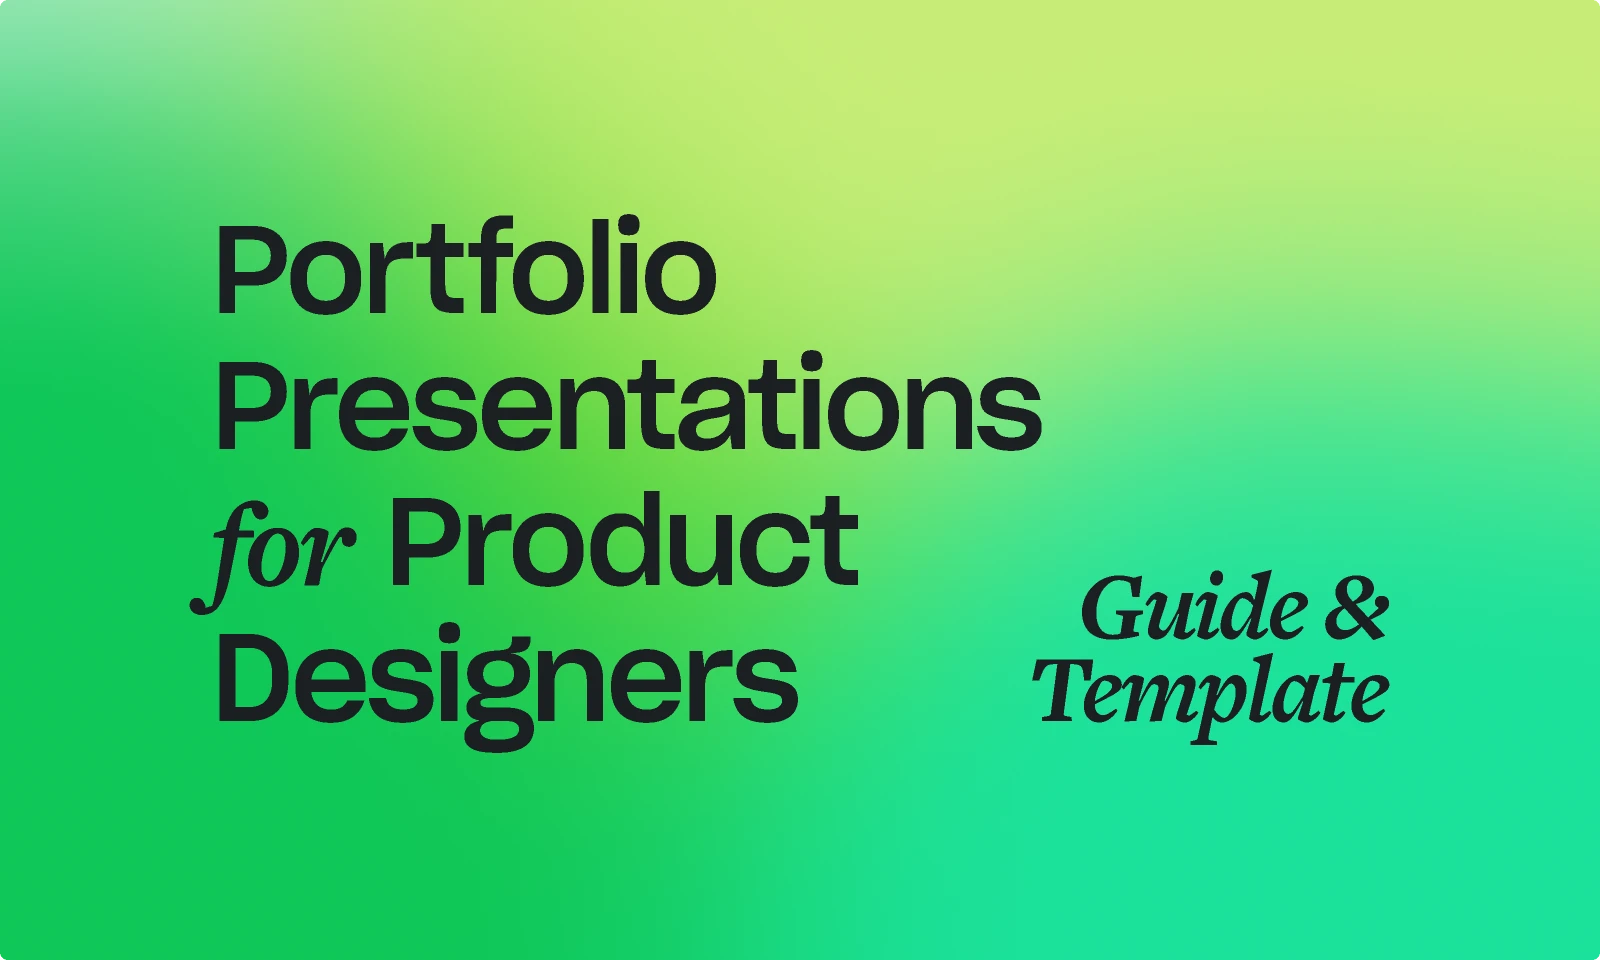  Portfolio Presentation Guide & Template for Figma and Adobe XD